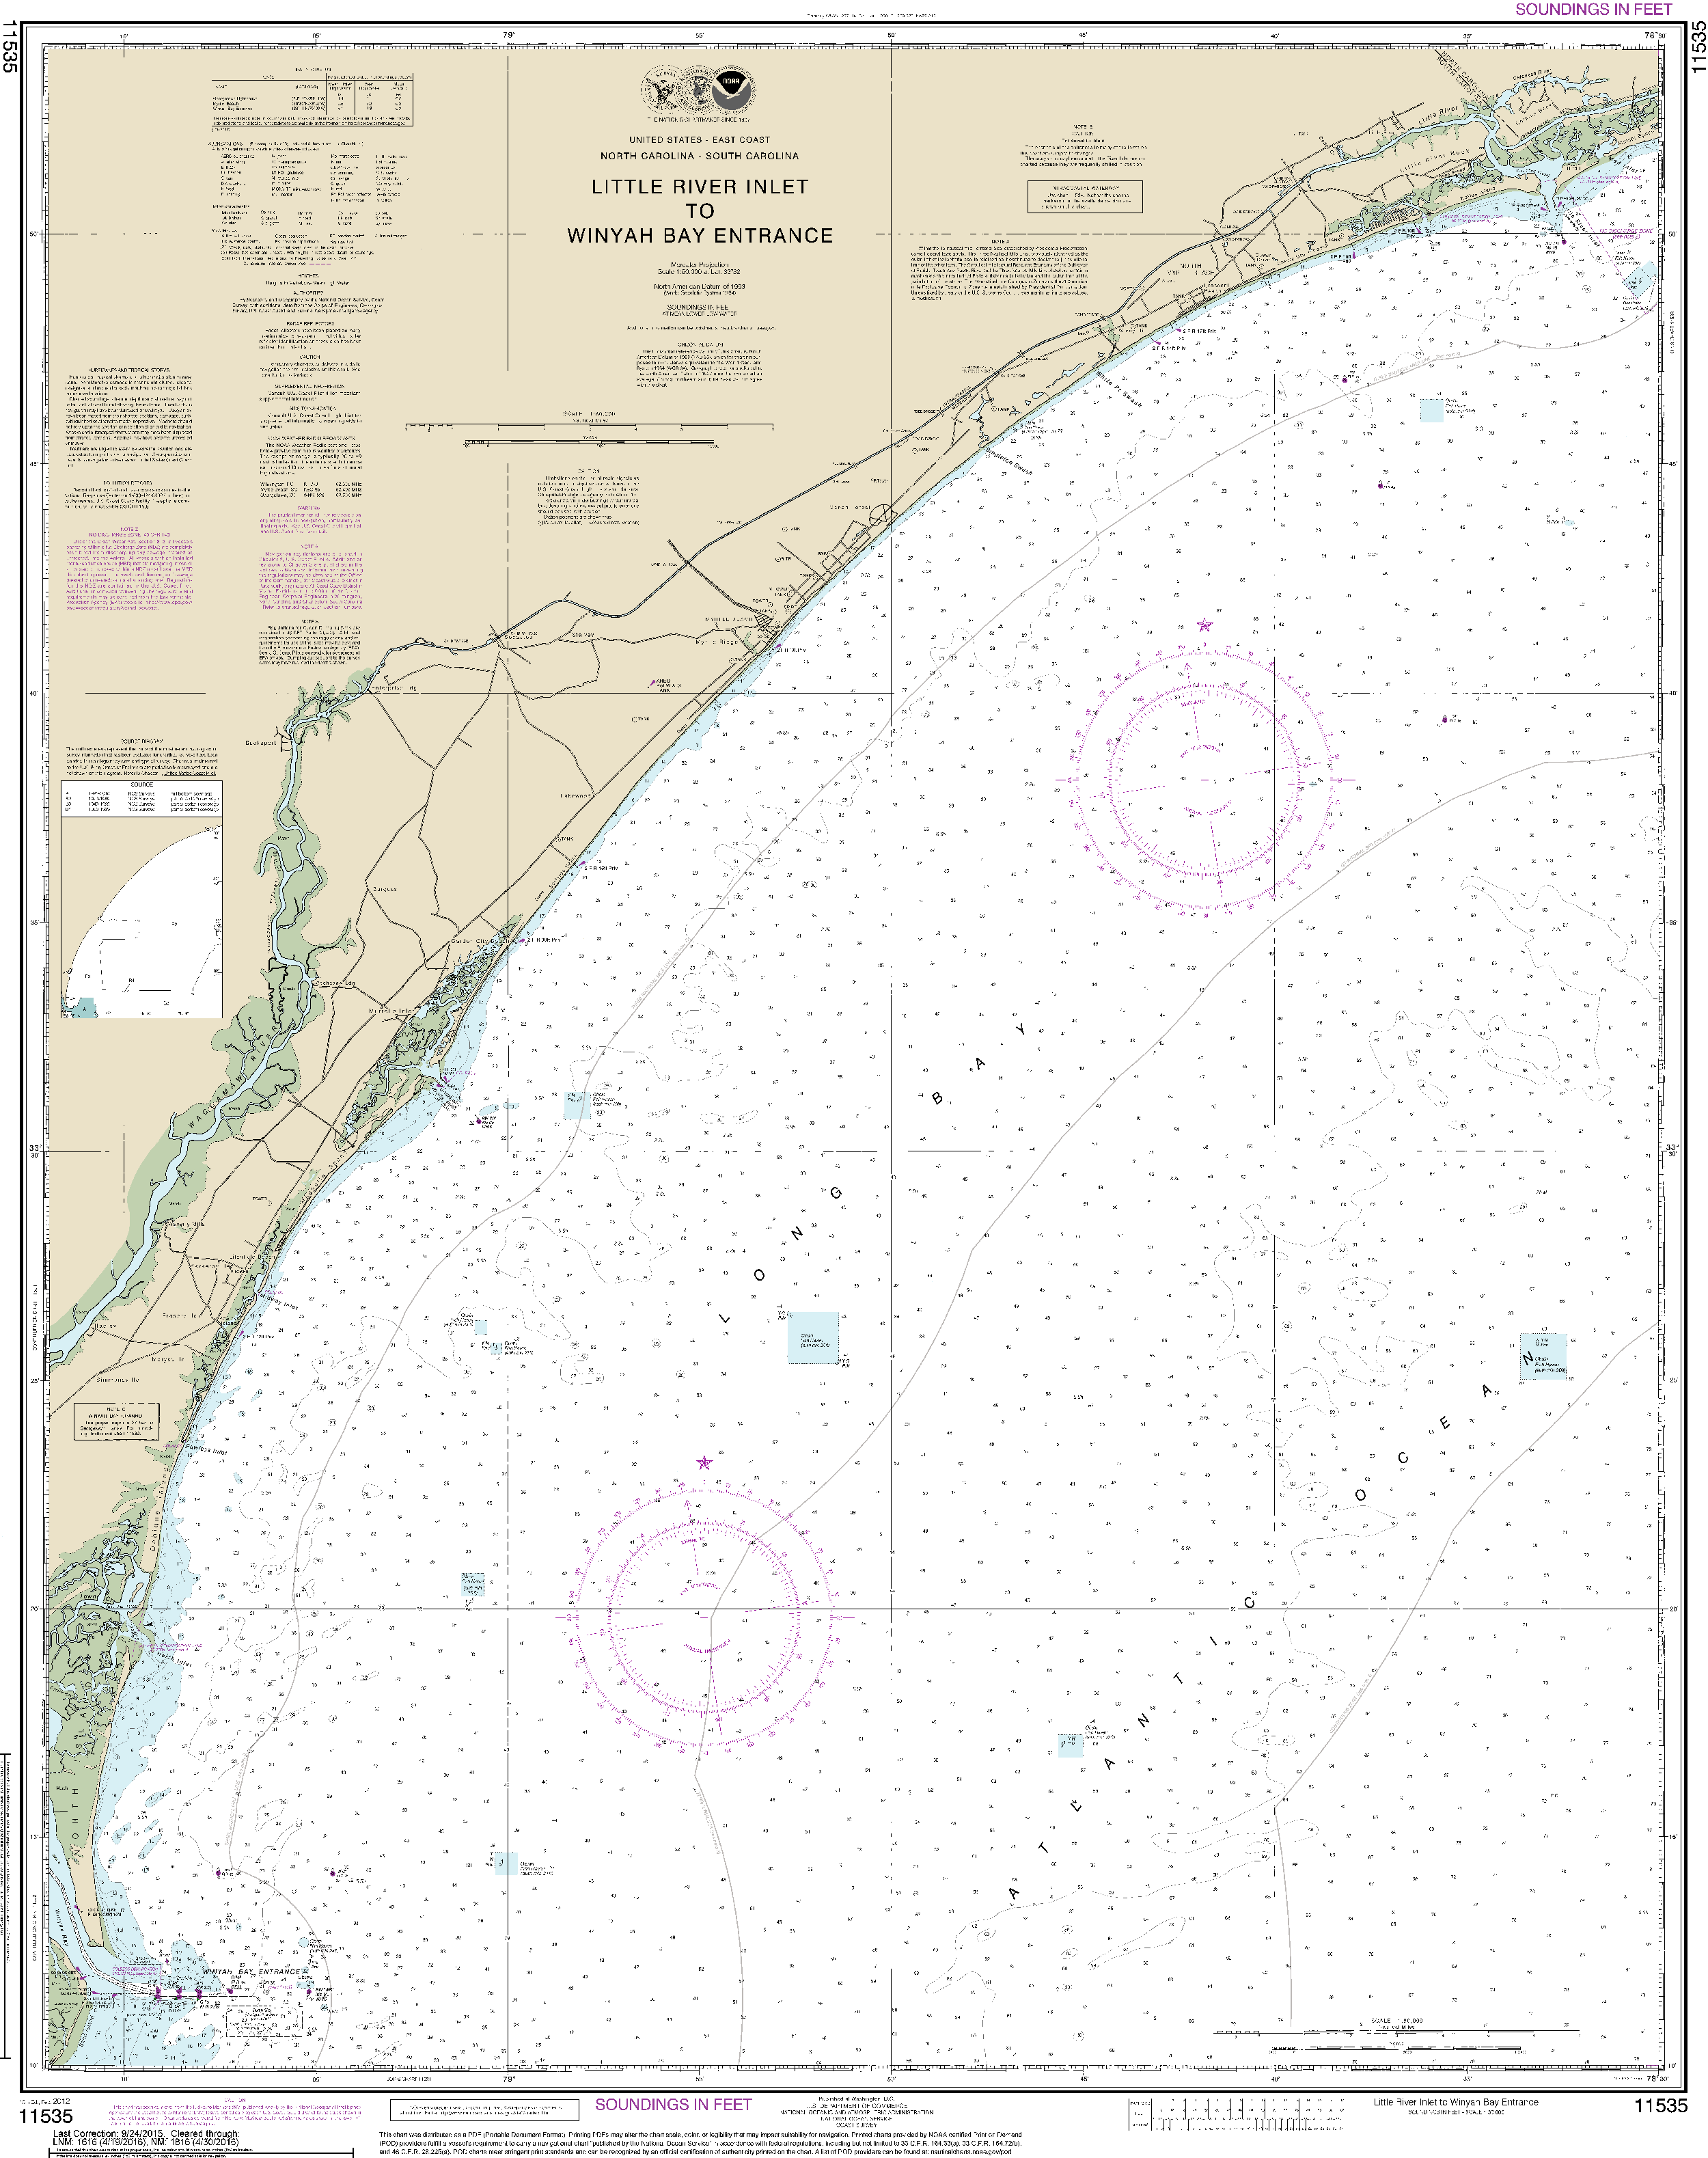 NOAA Nautical Chart 11535: Little River lnlet to Winyah Bay Entrance